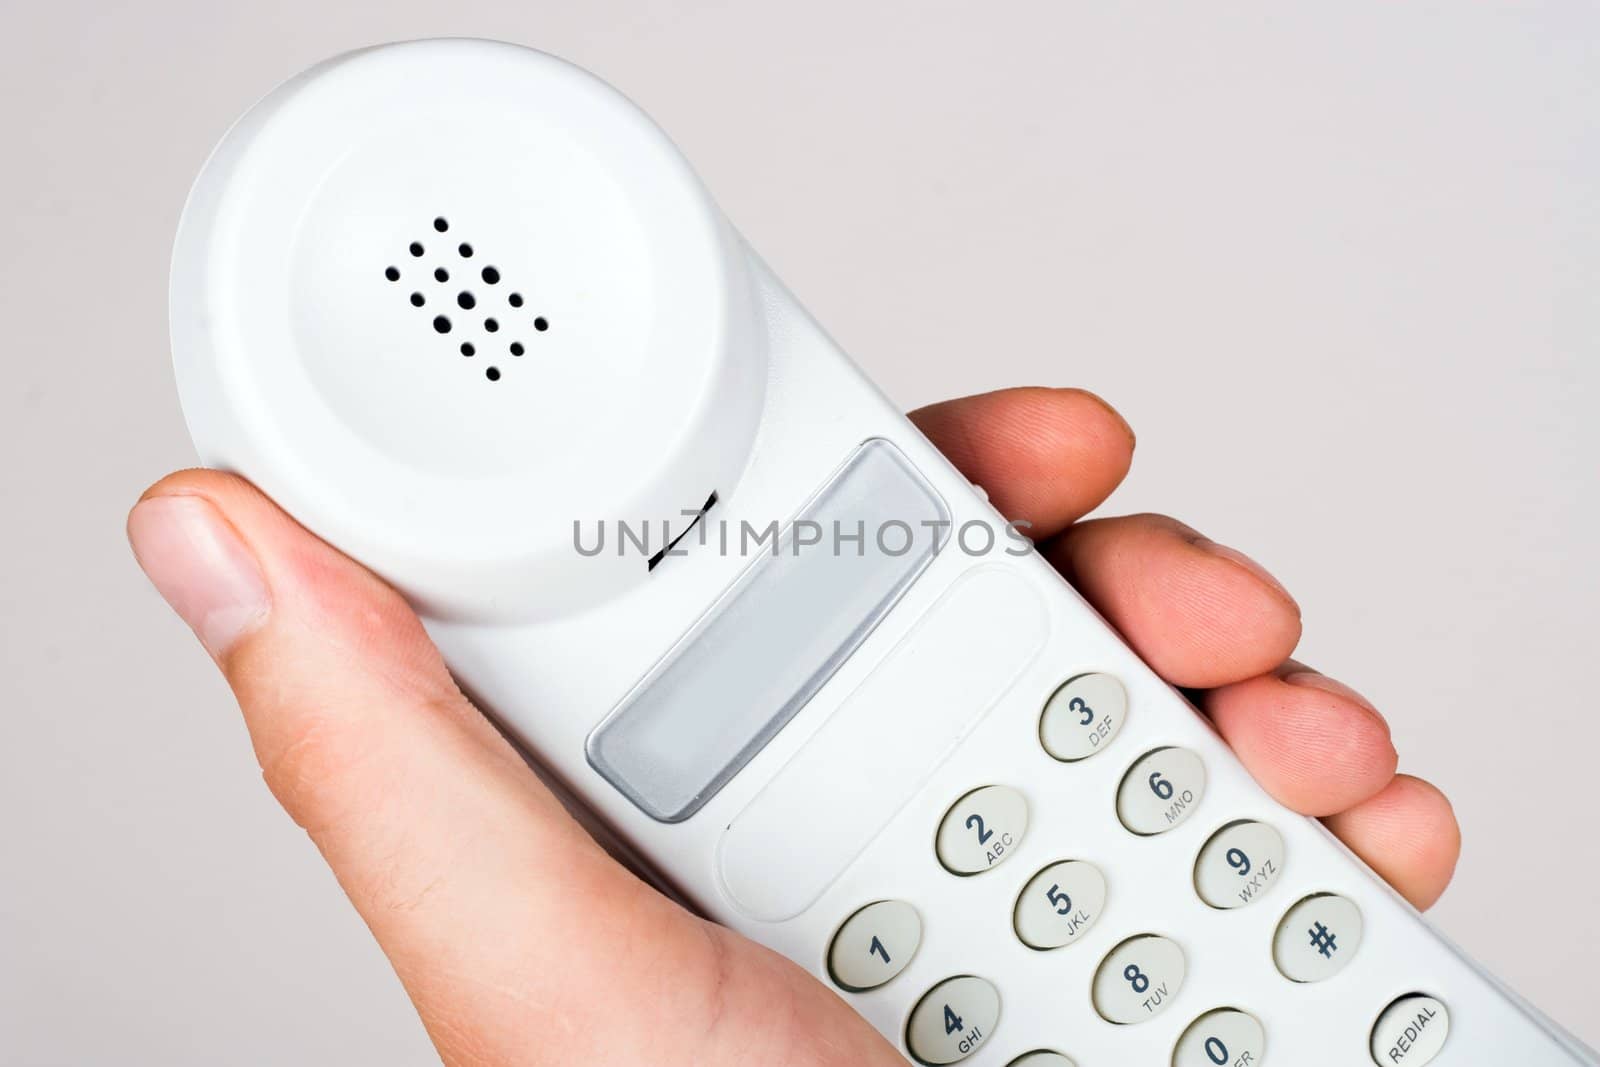 Phone in hand by velkol